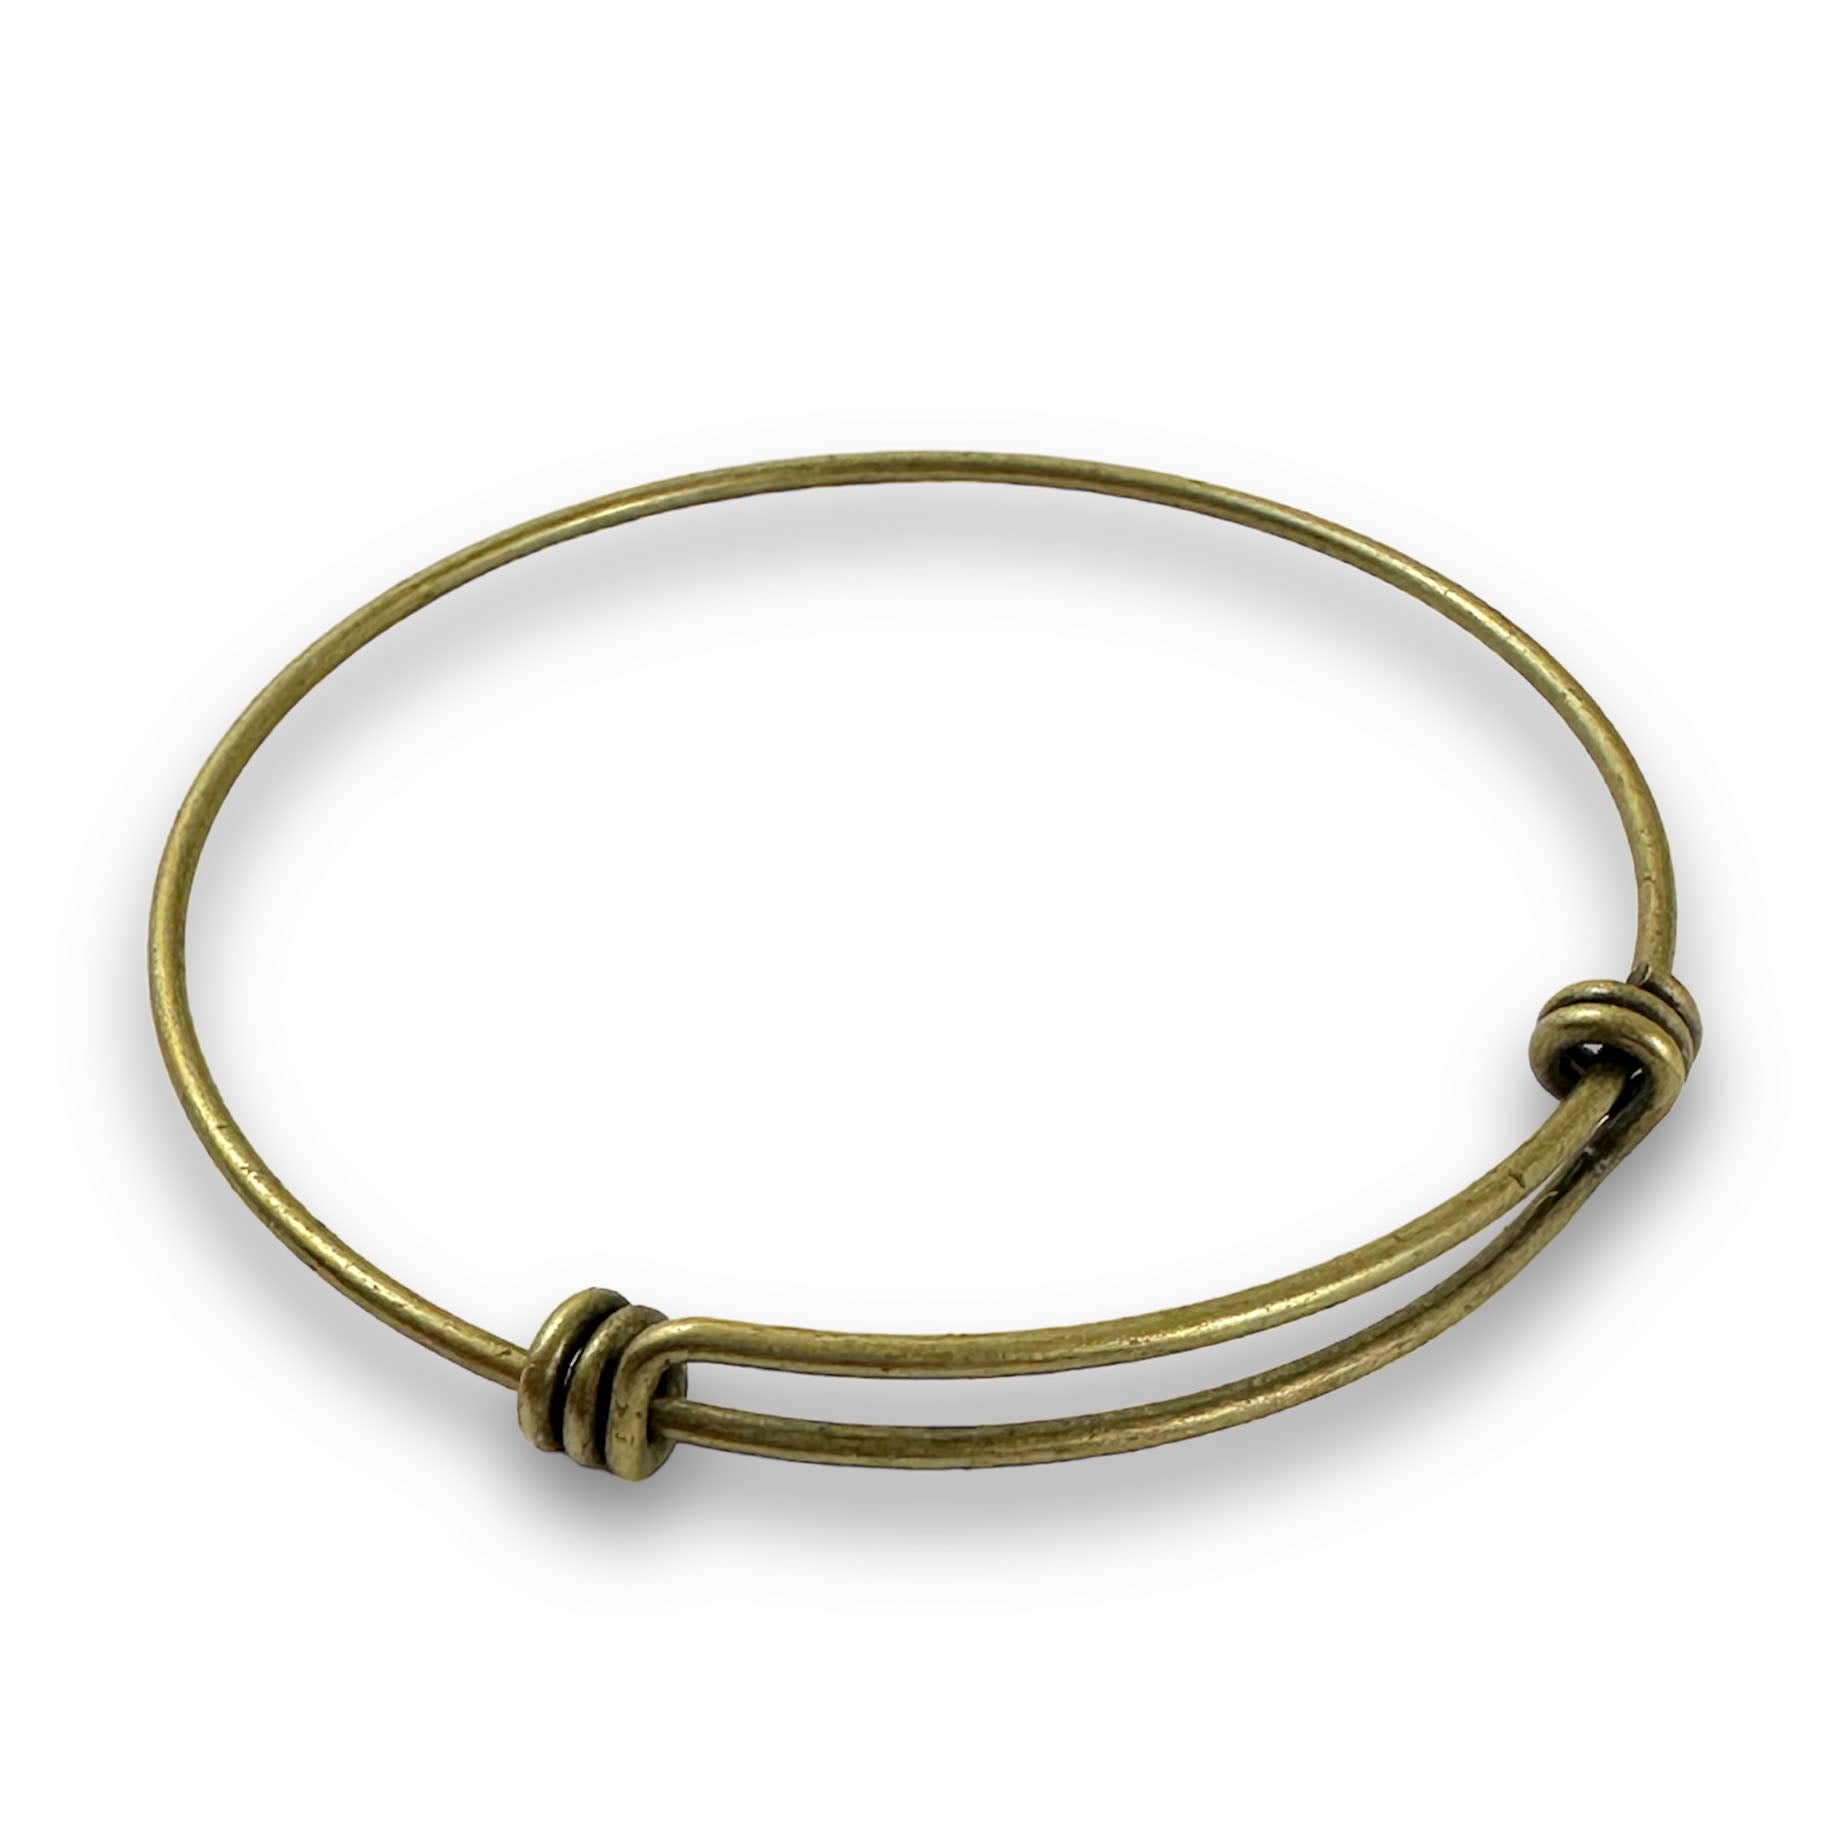 Jewelry Manufacturing Wire Supplier - Bulk Jewelry Wire Supplier